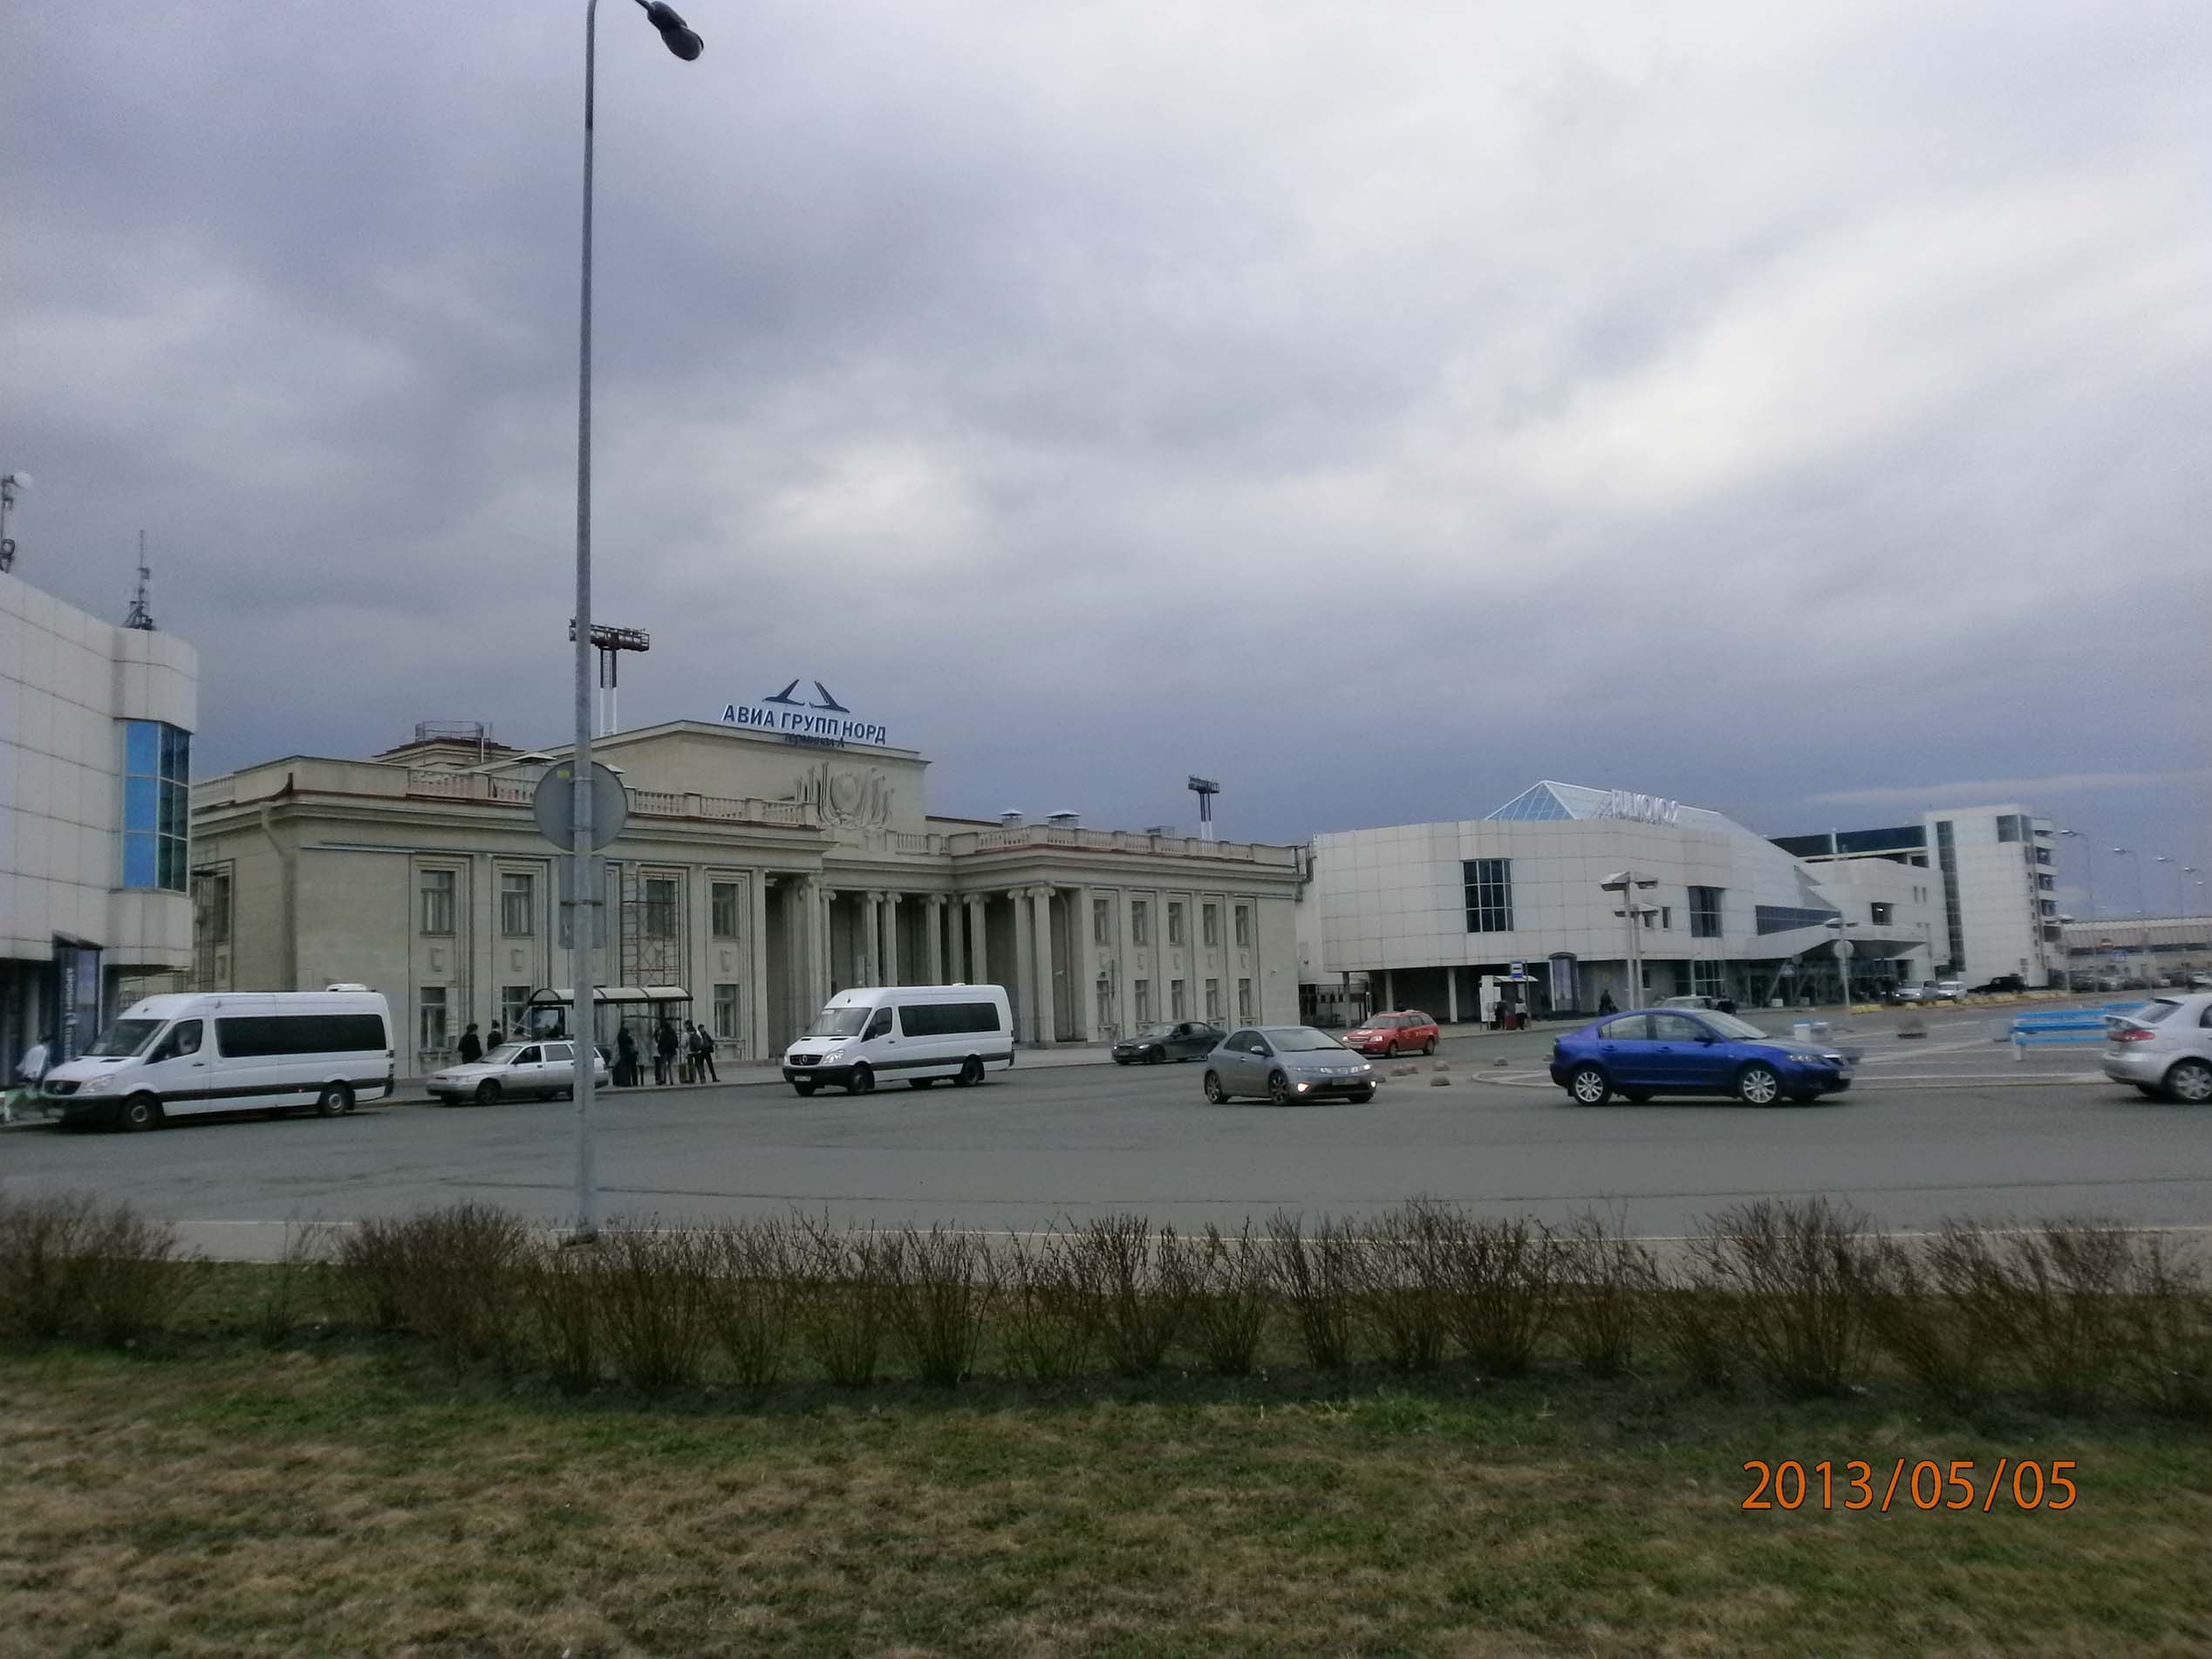 Pulkovo 2 airport